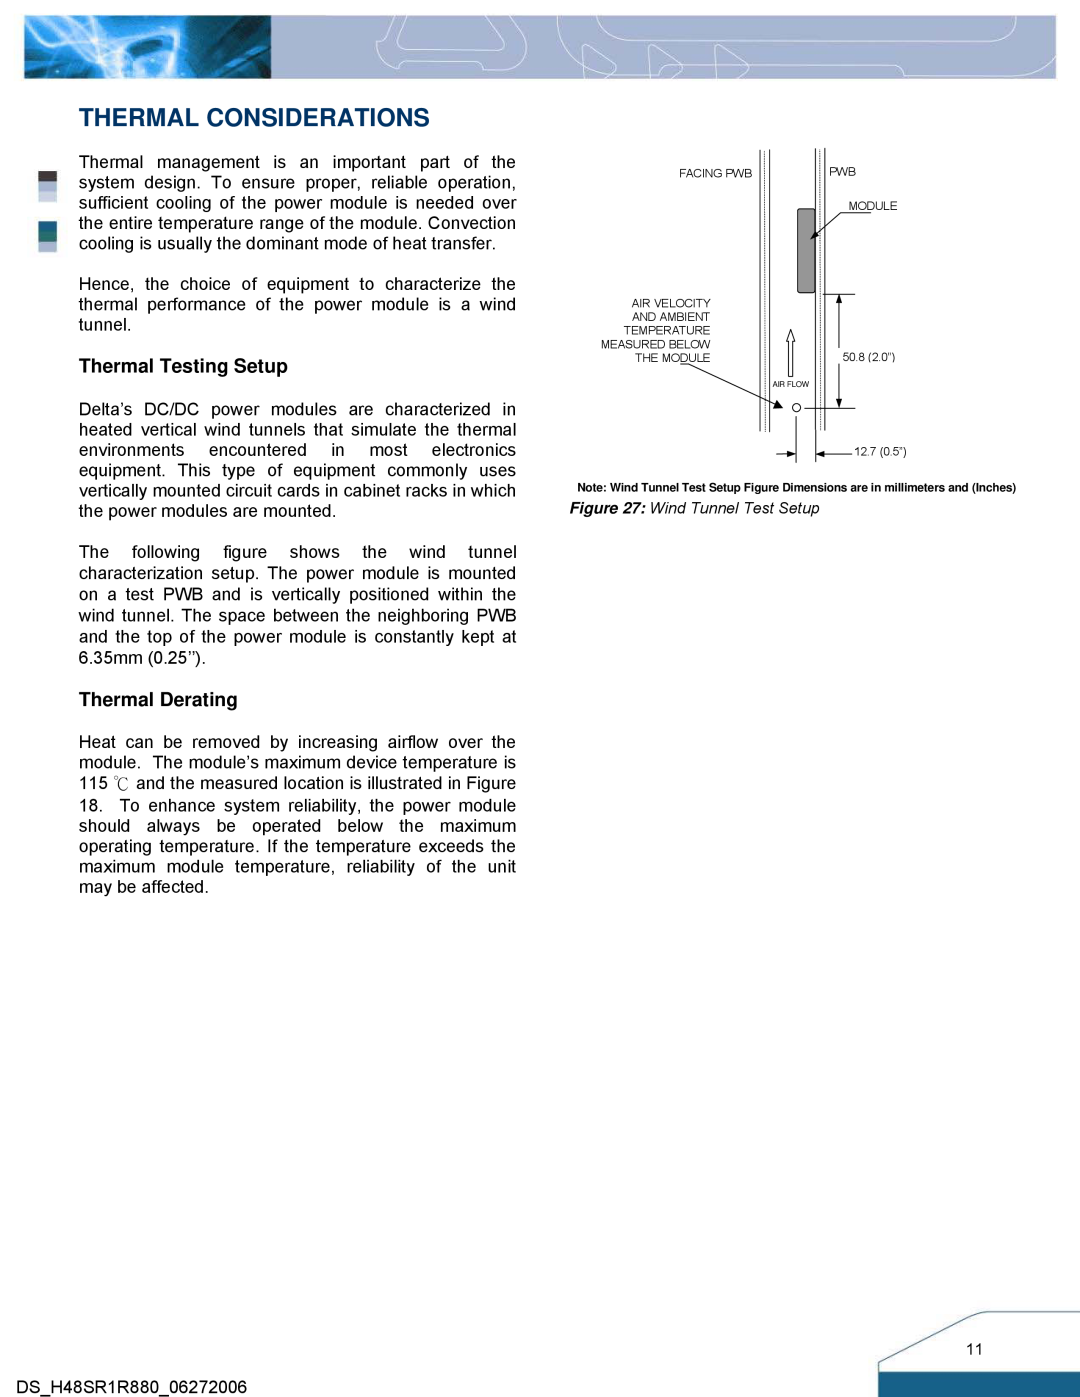 Delta Electronics H48SR manual Thermal Considerations, Thermal Testing Setup, Thermal Derating 